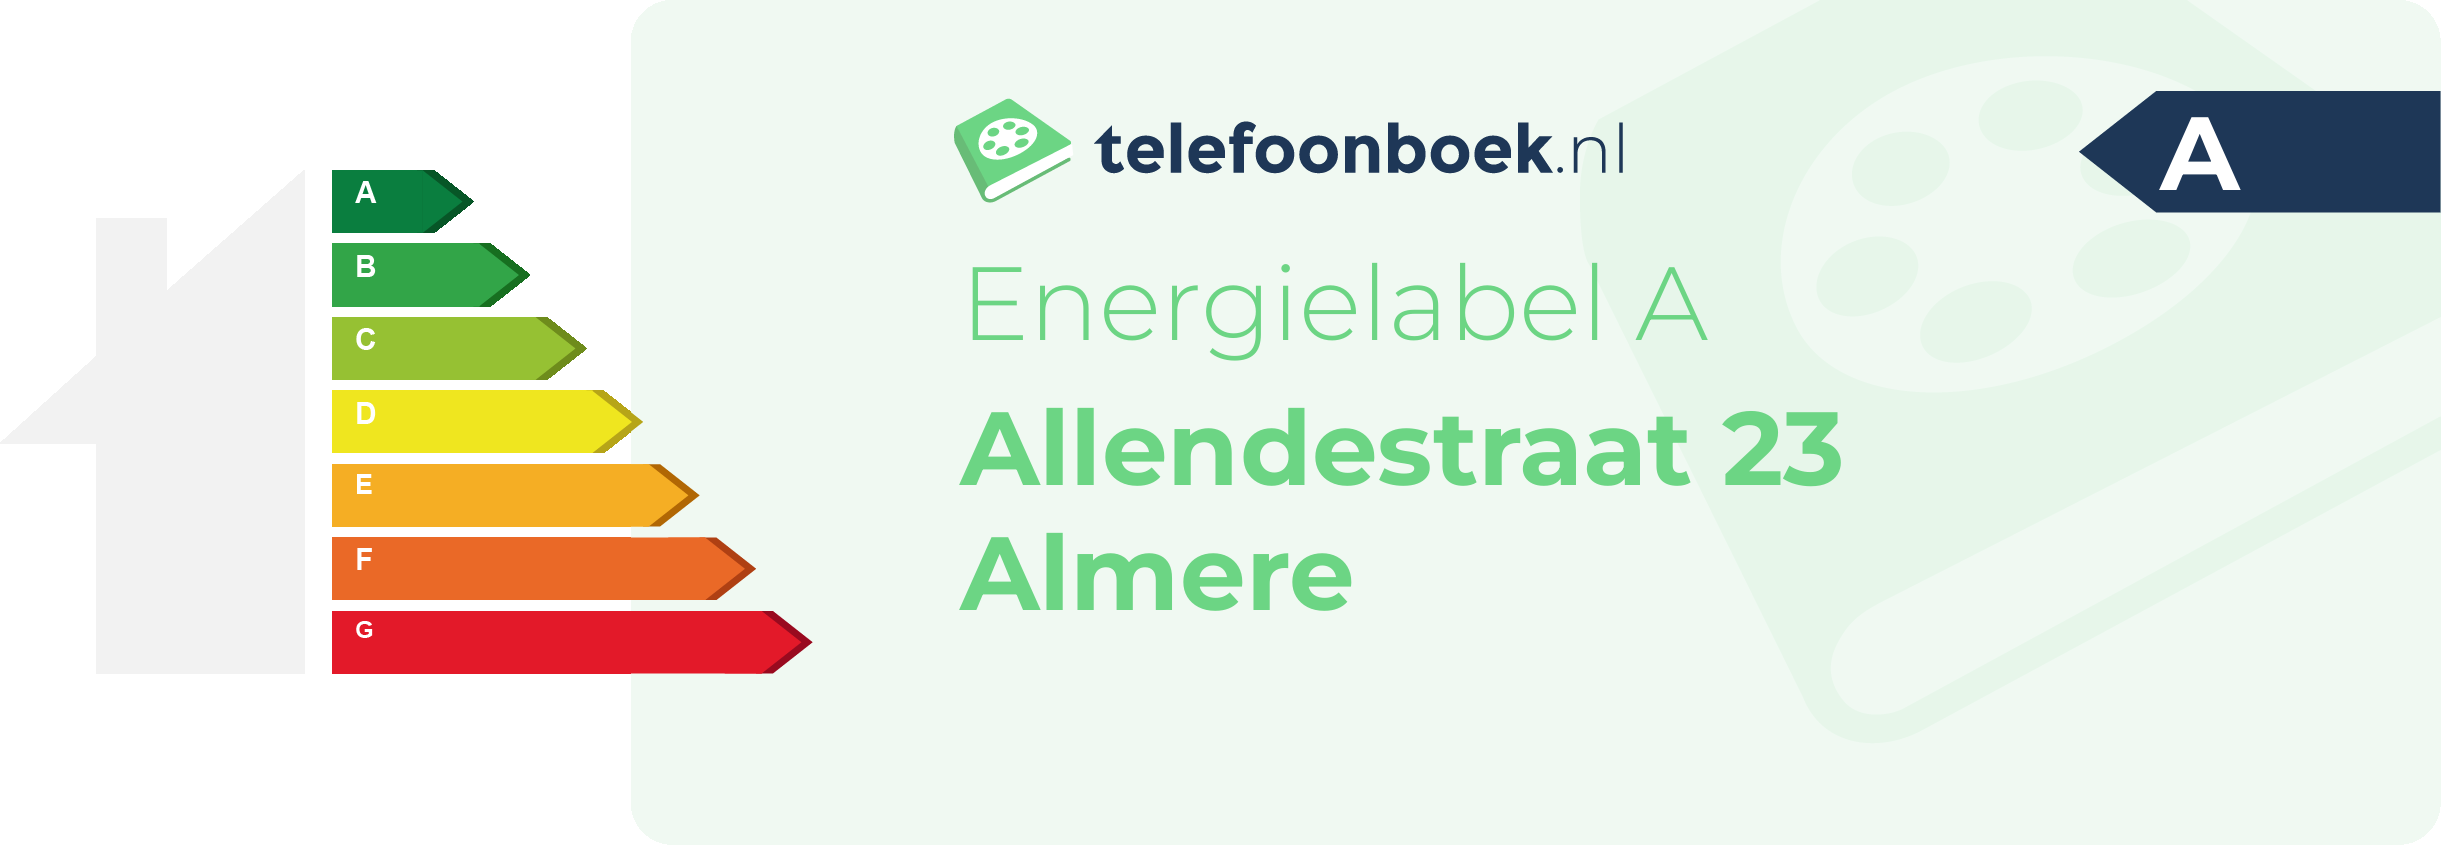 Energielabel Allendestraat 23 Almere